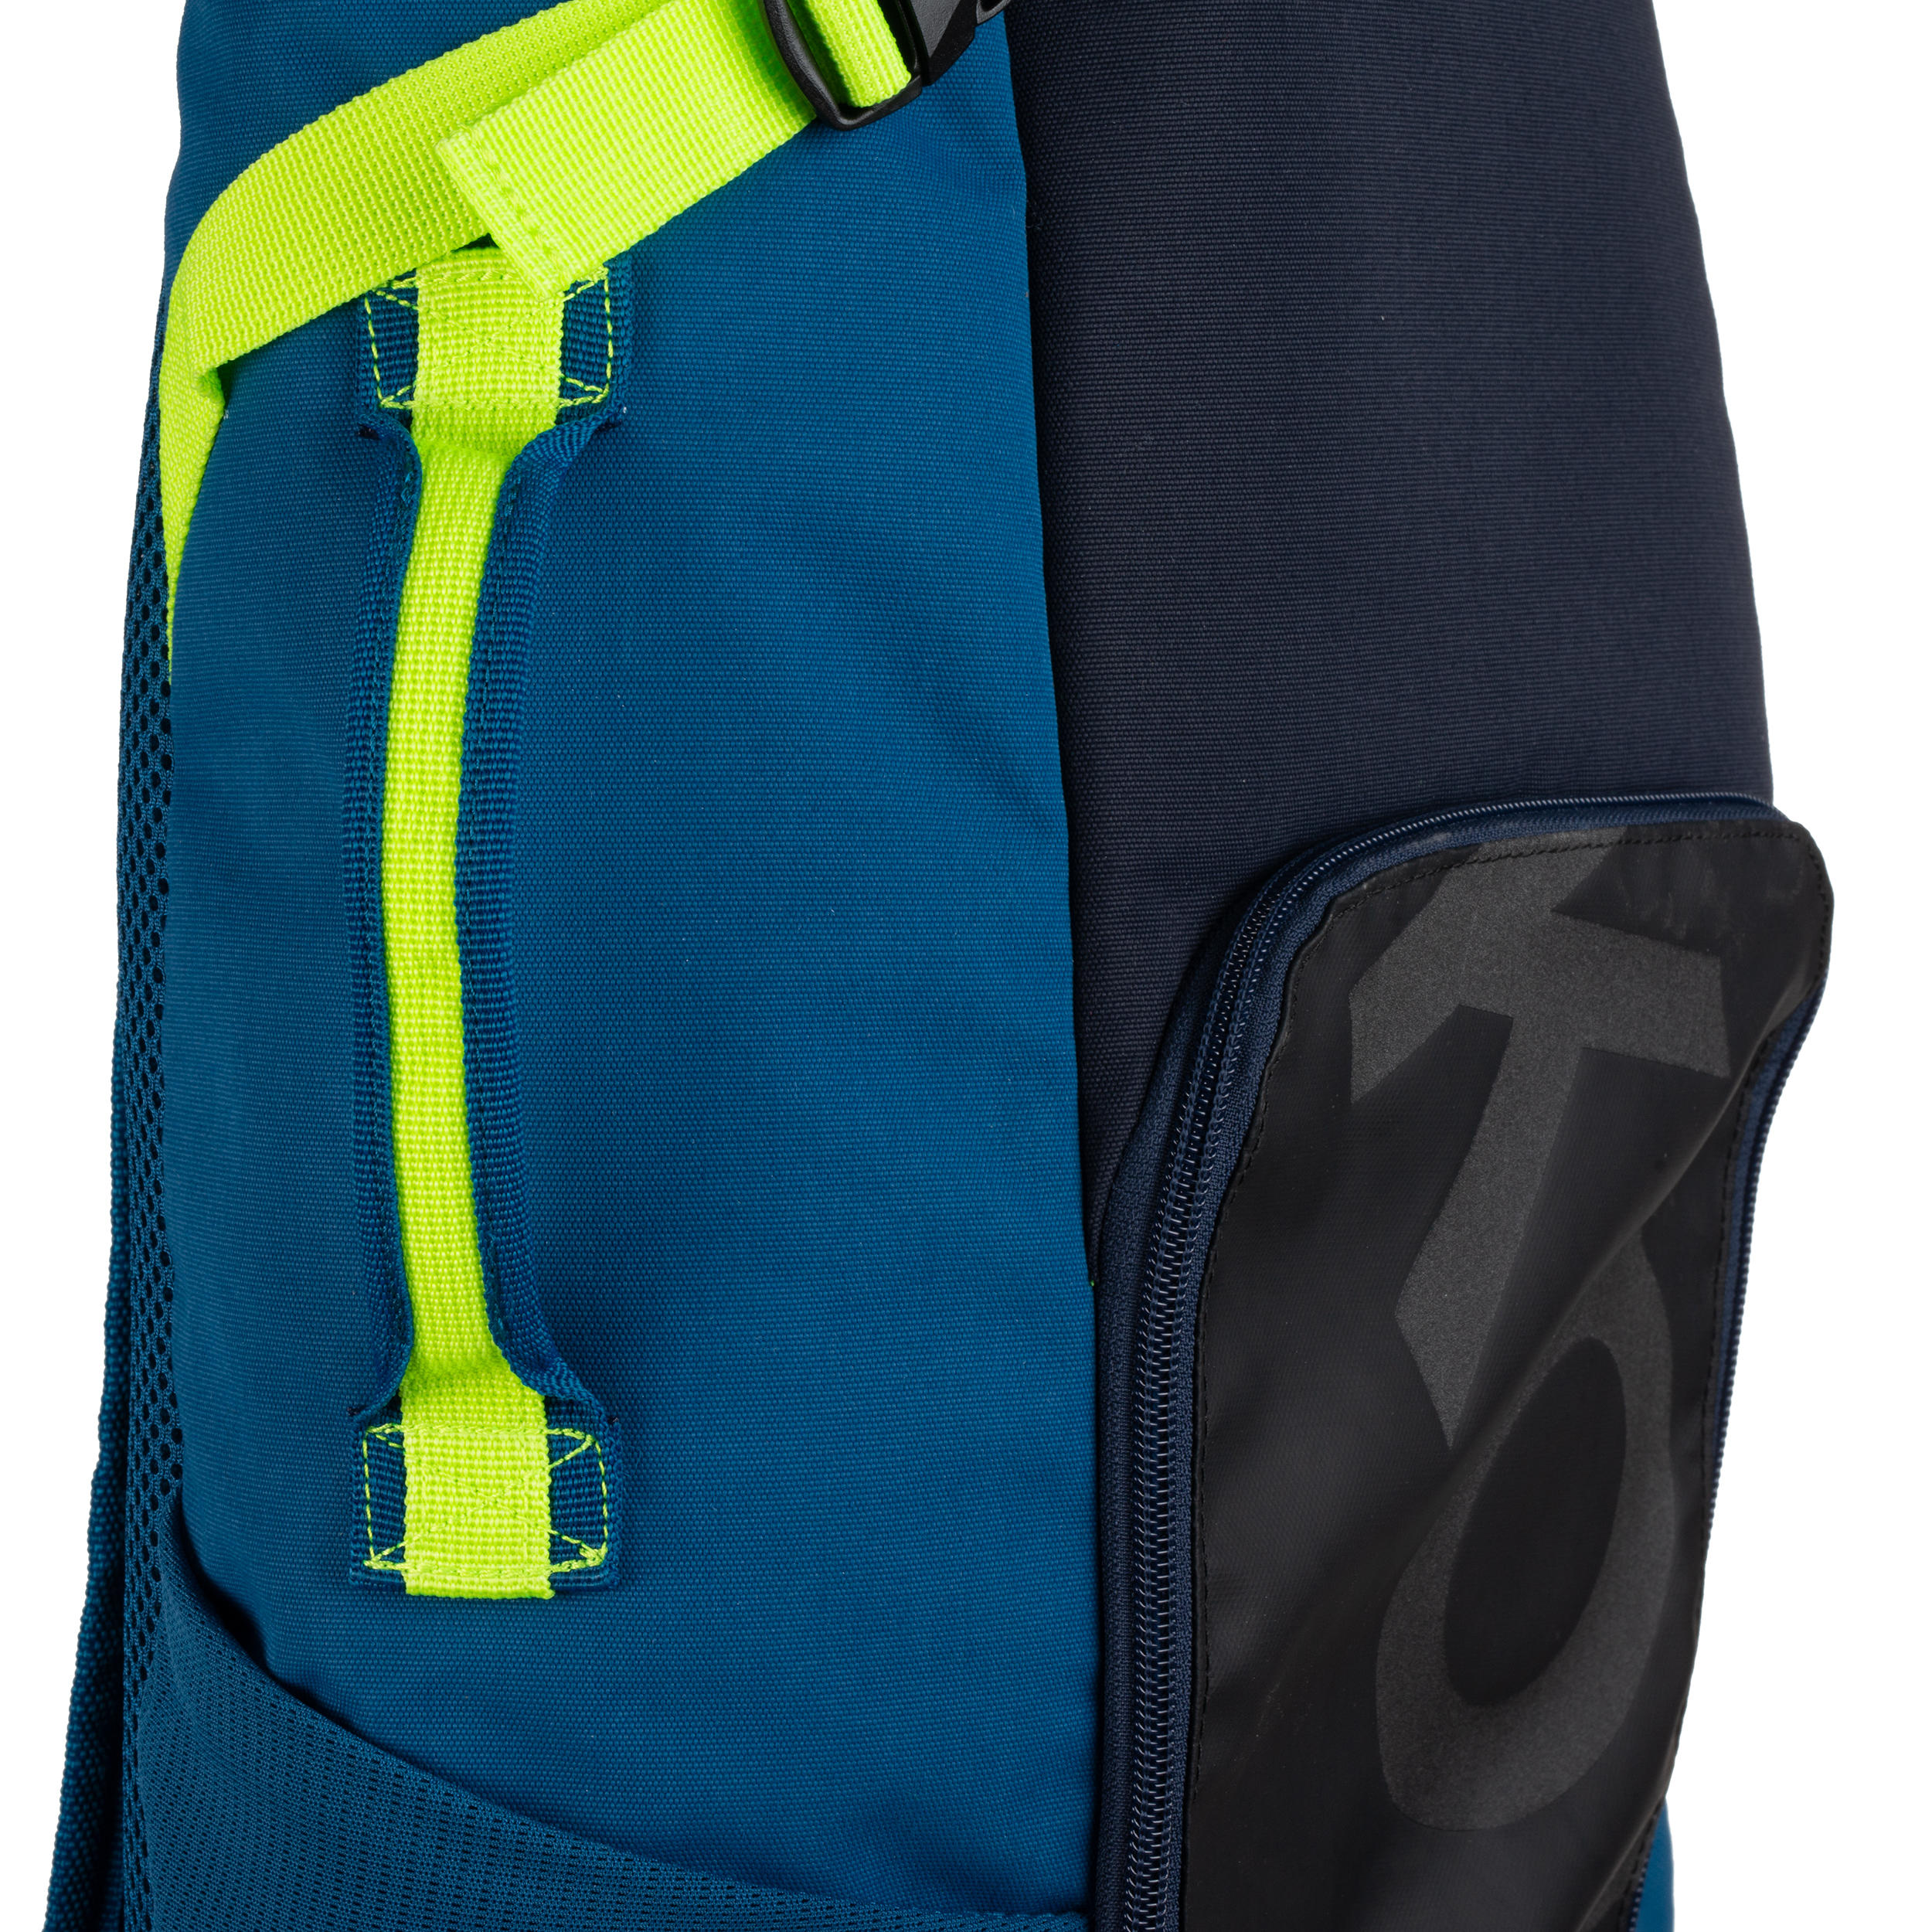 Kids'/Adult Large Field Hockey Stick Bag FH560 - Blue/Yellow 3/10